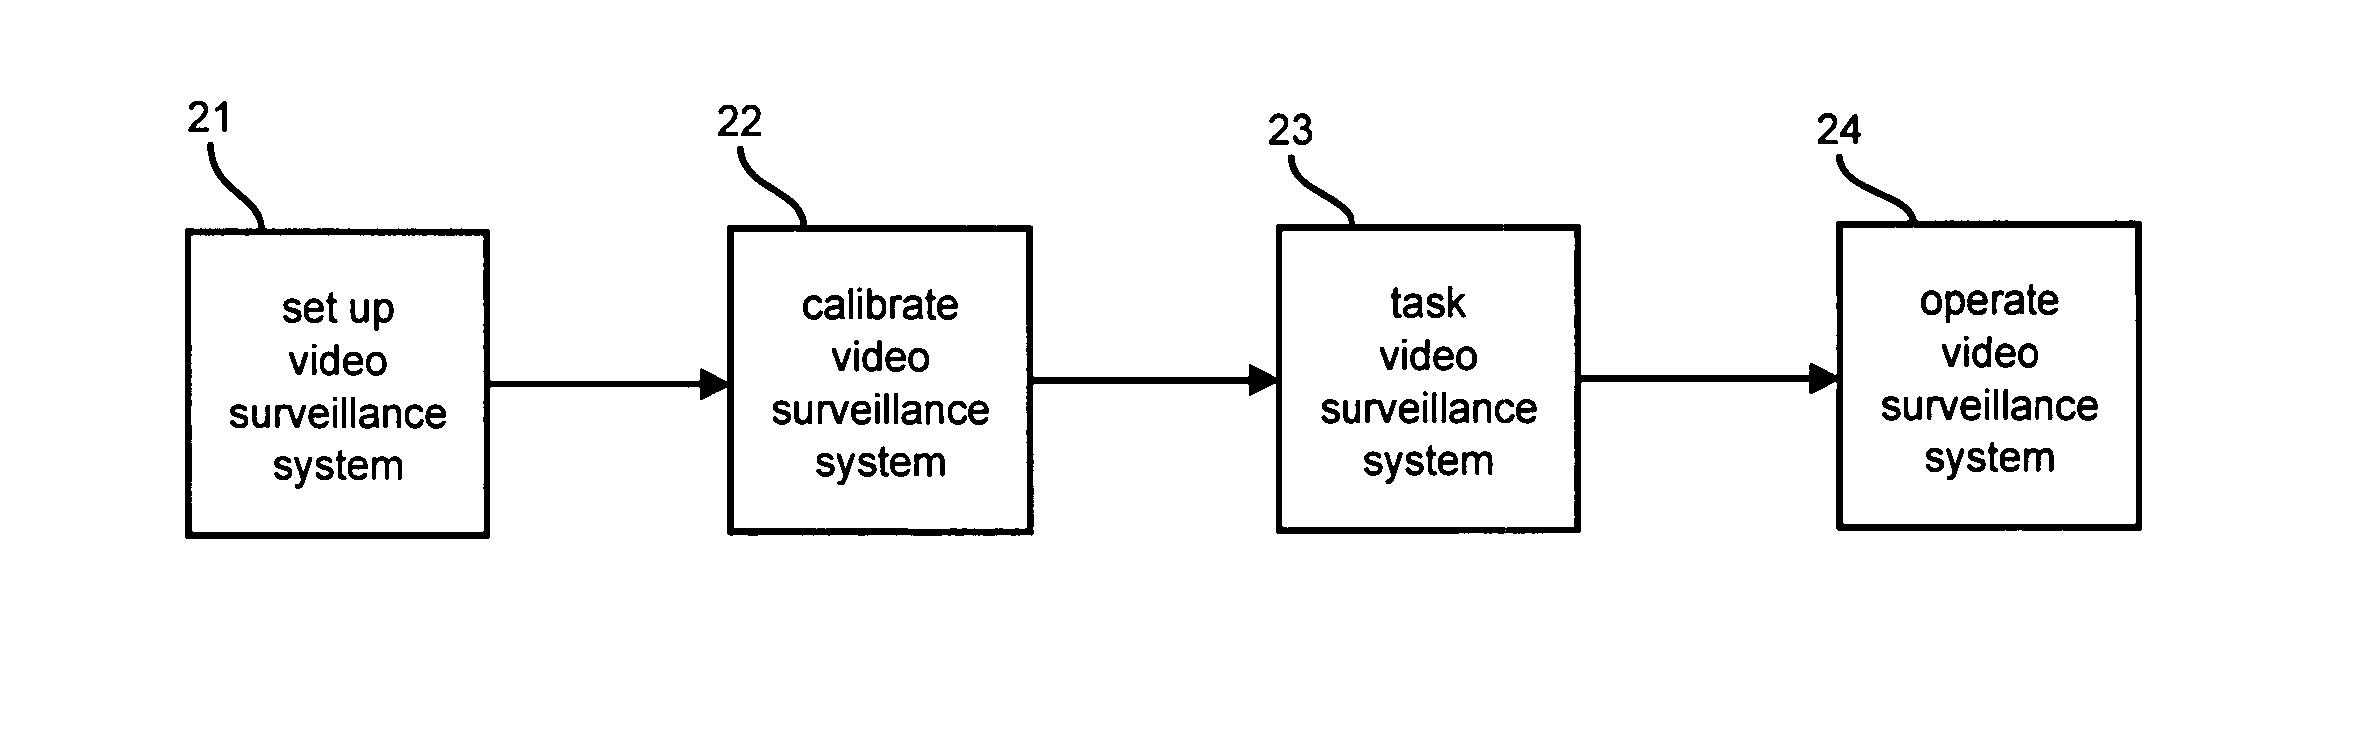 Video surveillance system employing video primitives